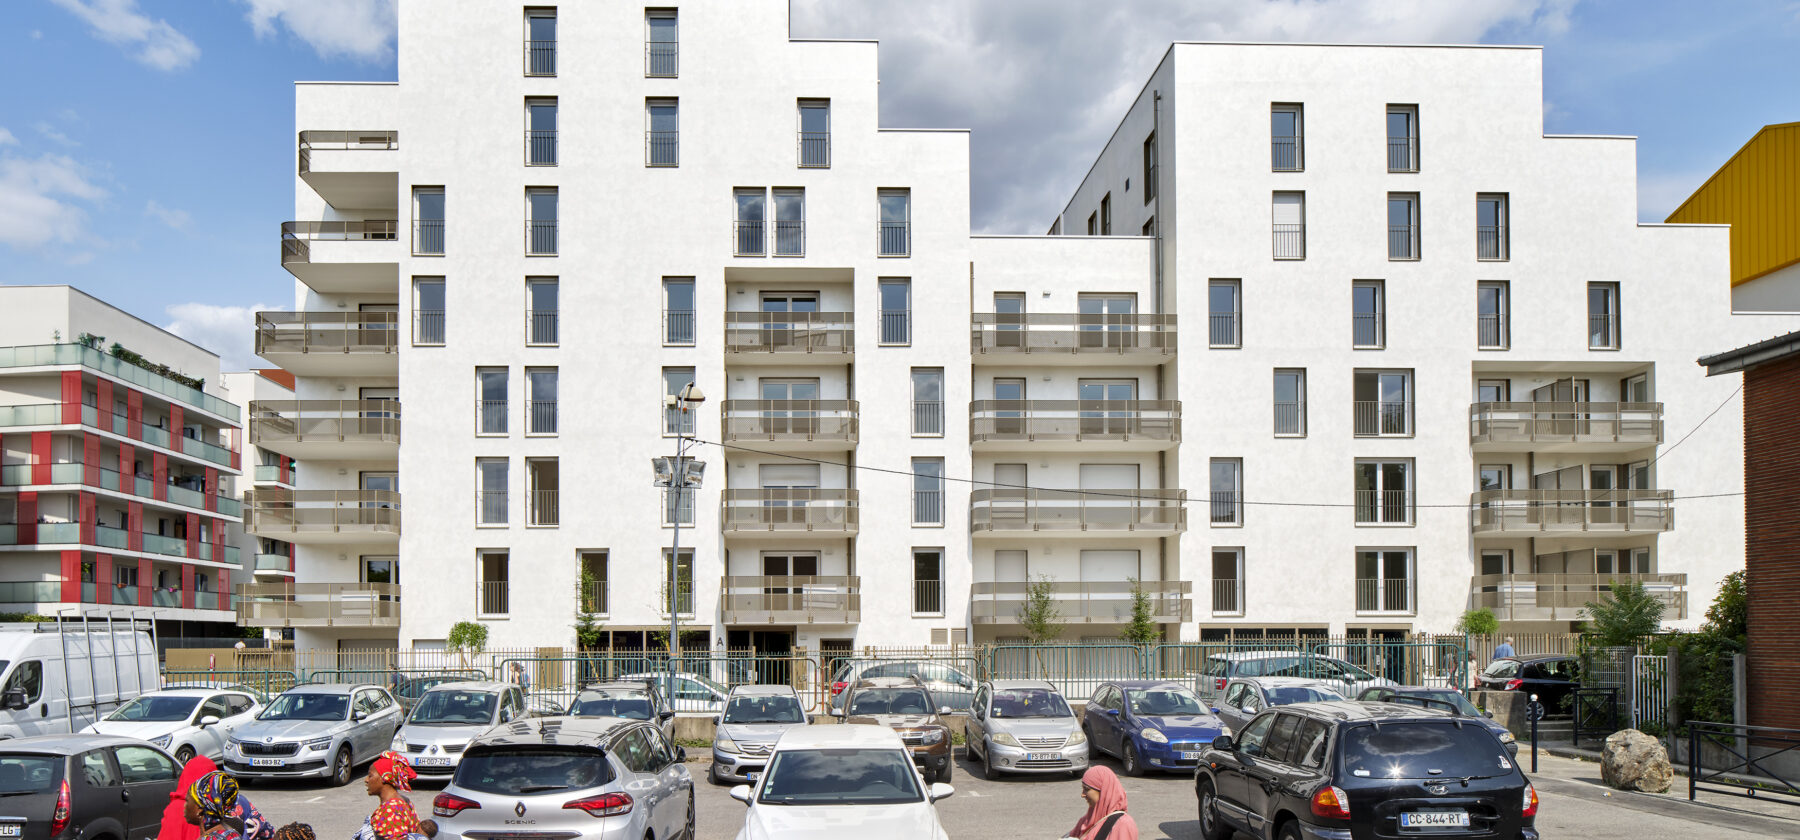 45 housing units in Champigny-sur-Marne Bruno Rollet Architecte